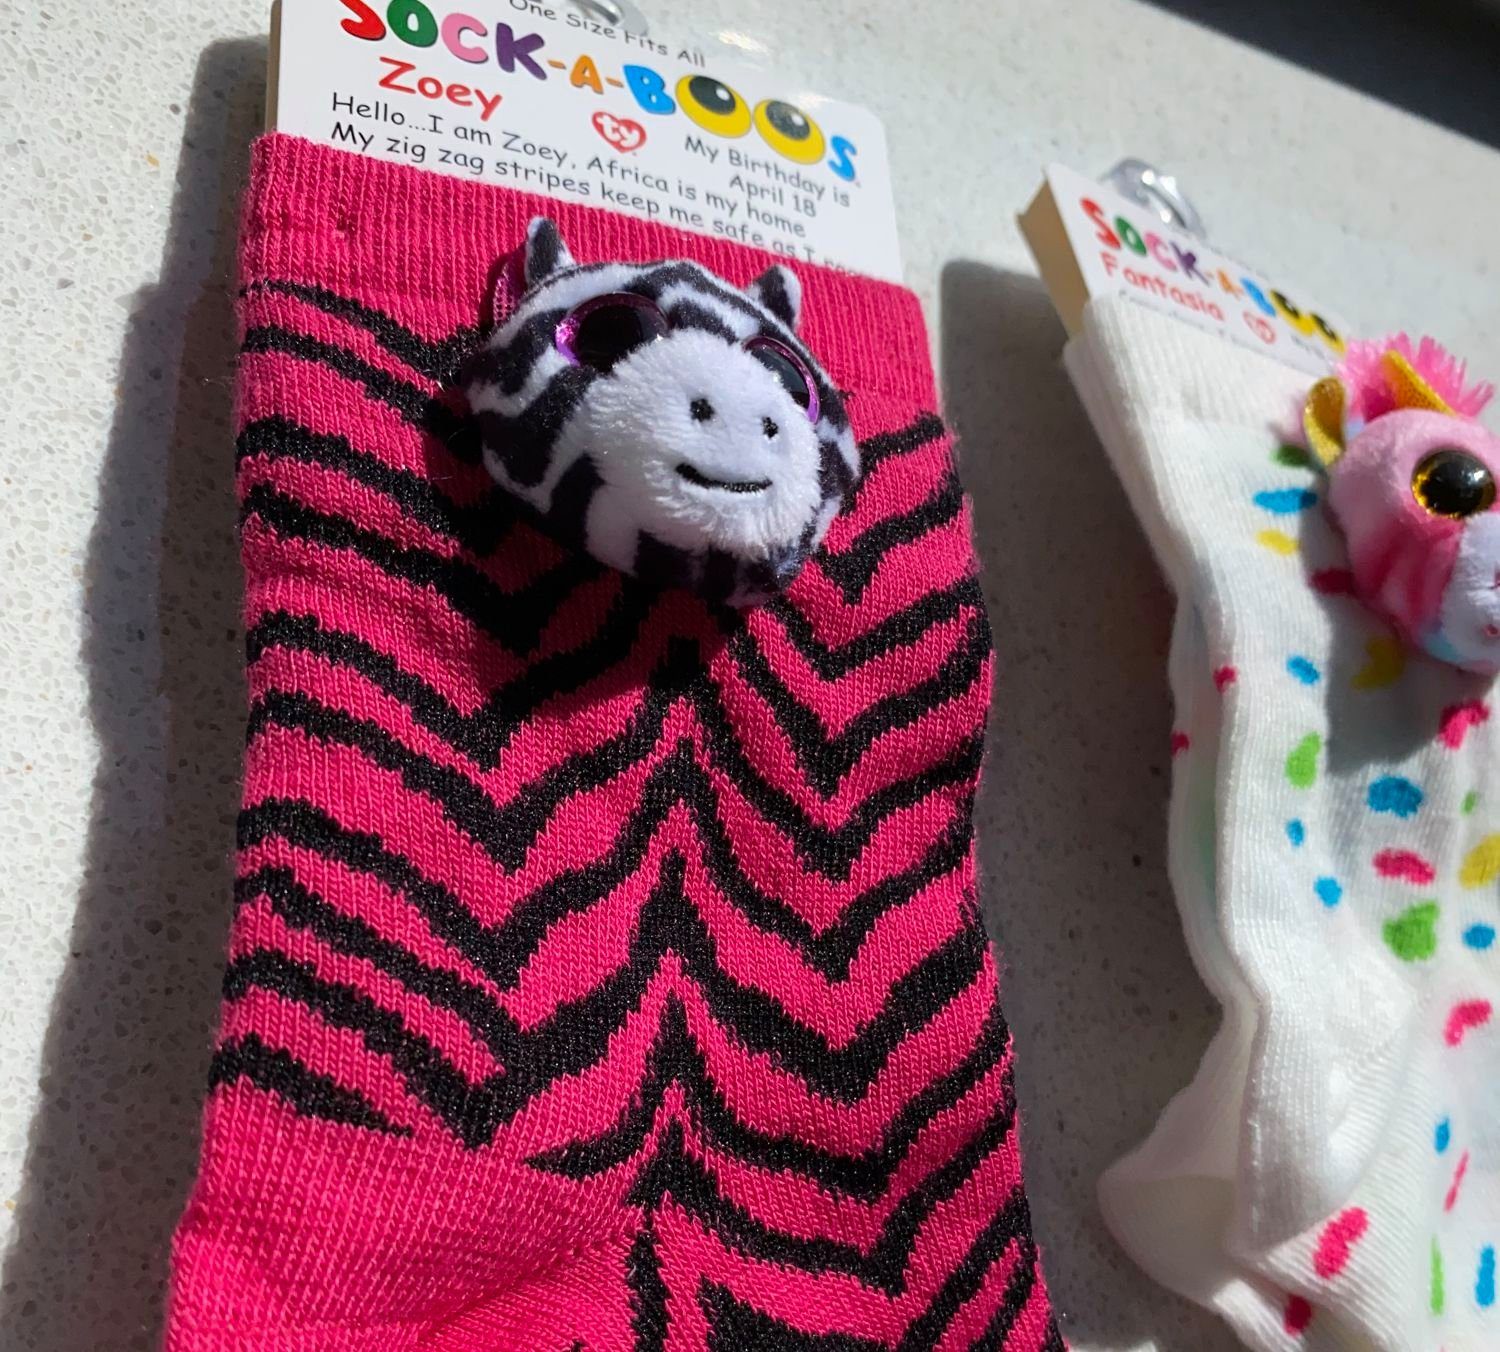 coole-fun-t-shirts Feinsocken 6-12 Fashion Socken pink Doppelpack TY + Einhorn Mädchen SOCK-A-BOOS + Jahre Kuscheltier Zoey Socken 3D + Fantasia Zebra beige